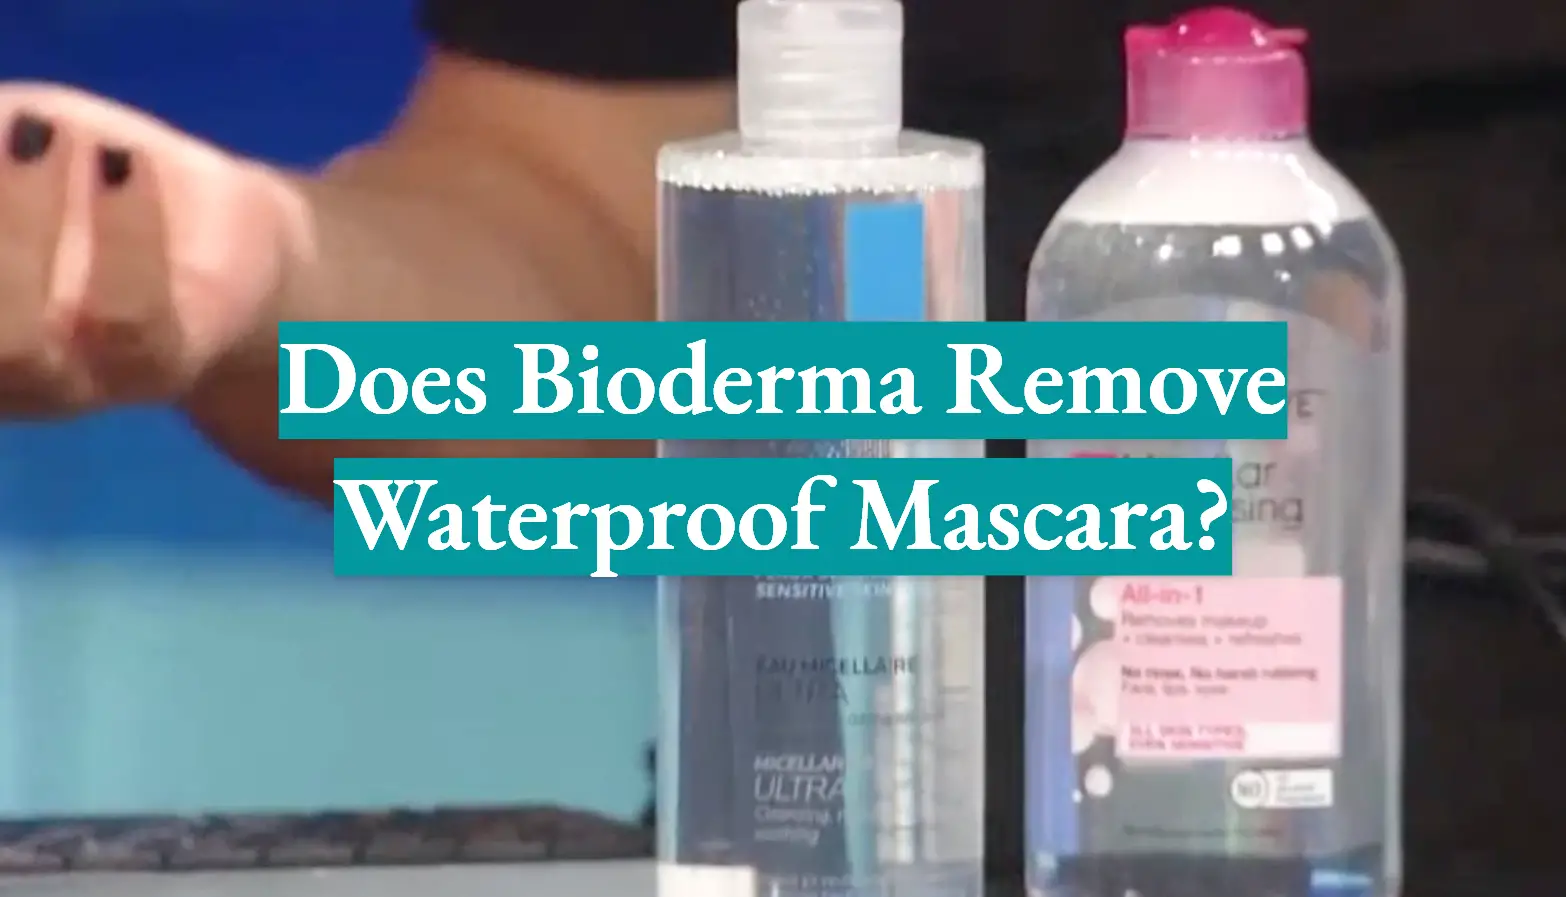 Does Bioderma Remove Waterproof Mascara?